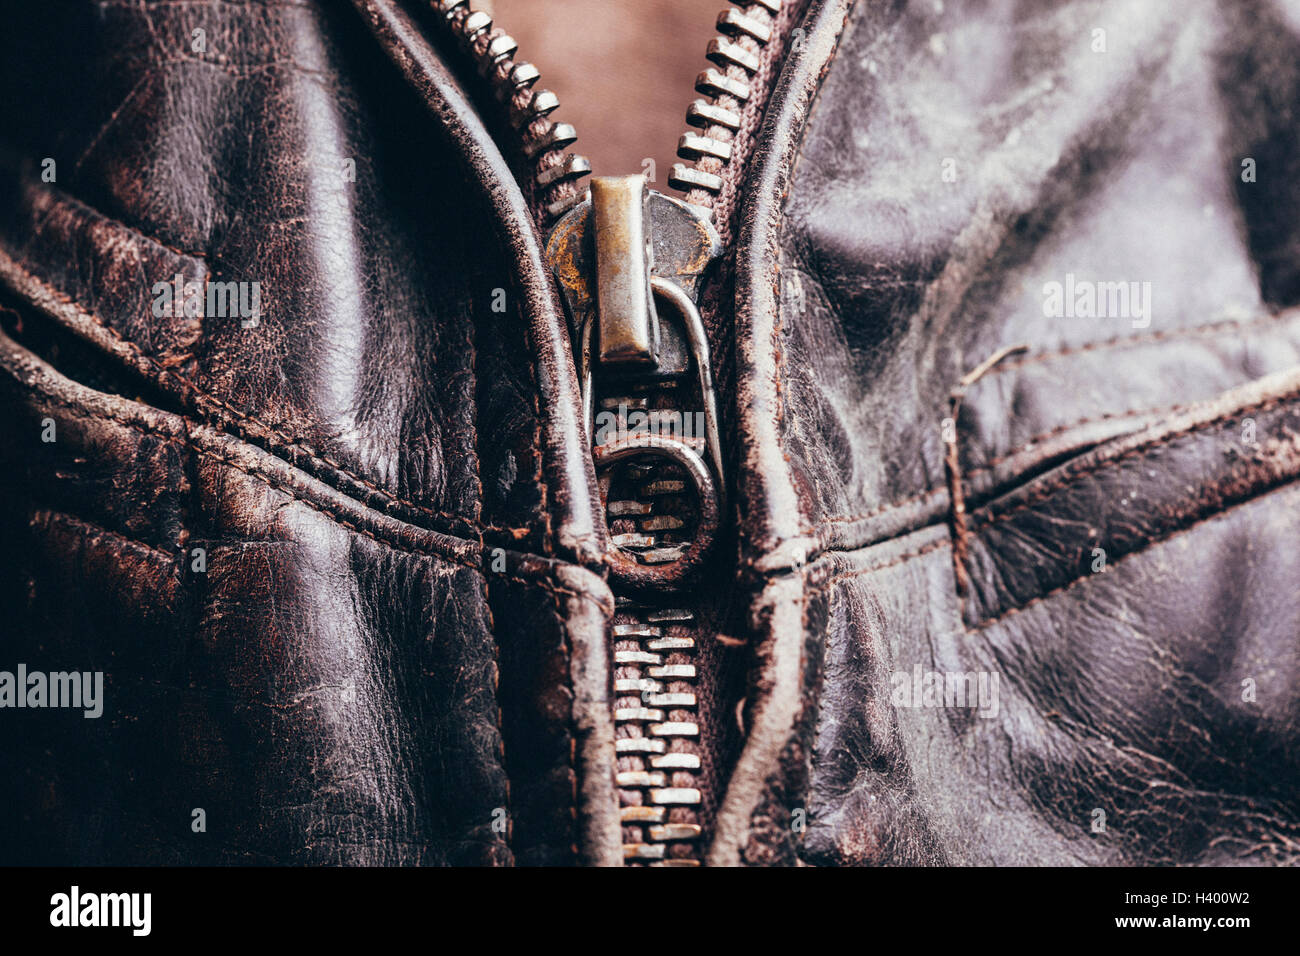 Full frame detail shot of leather jacket Stock Photo